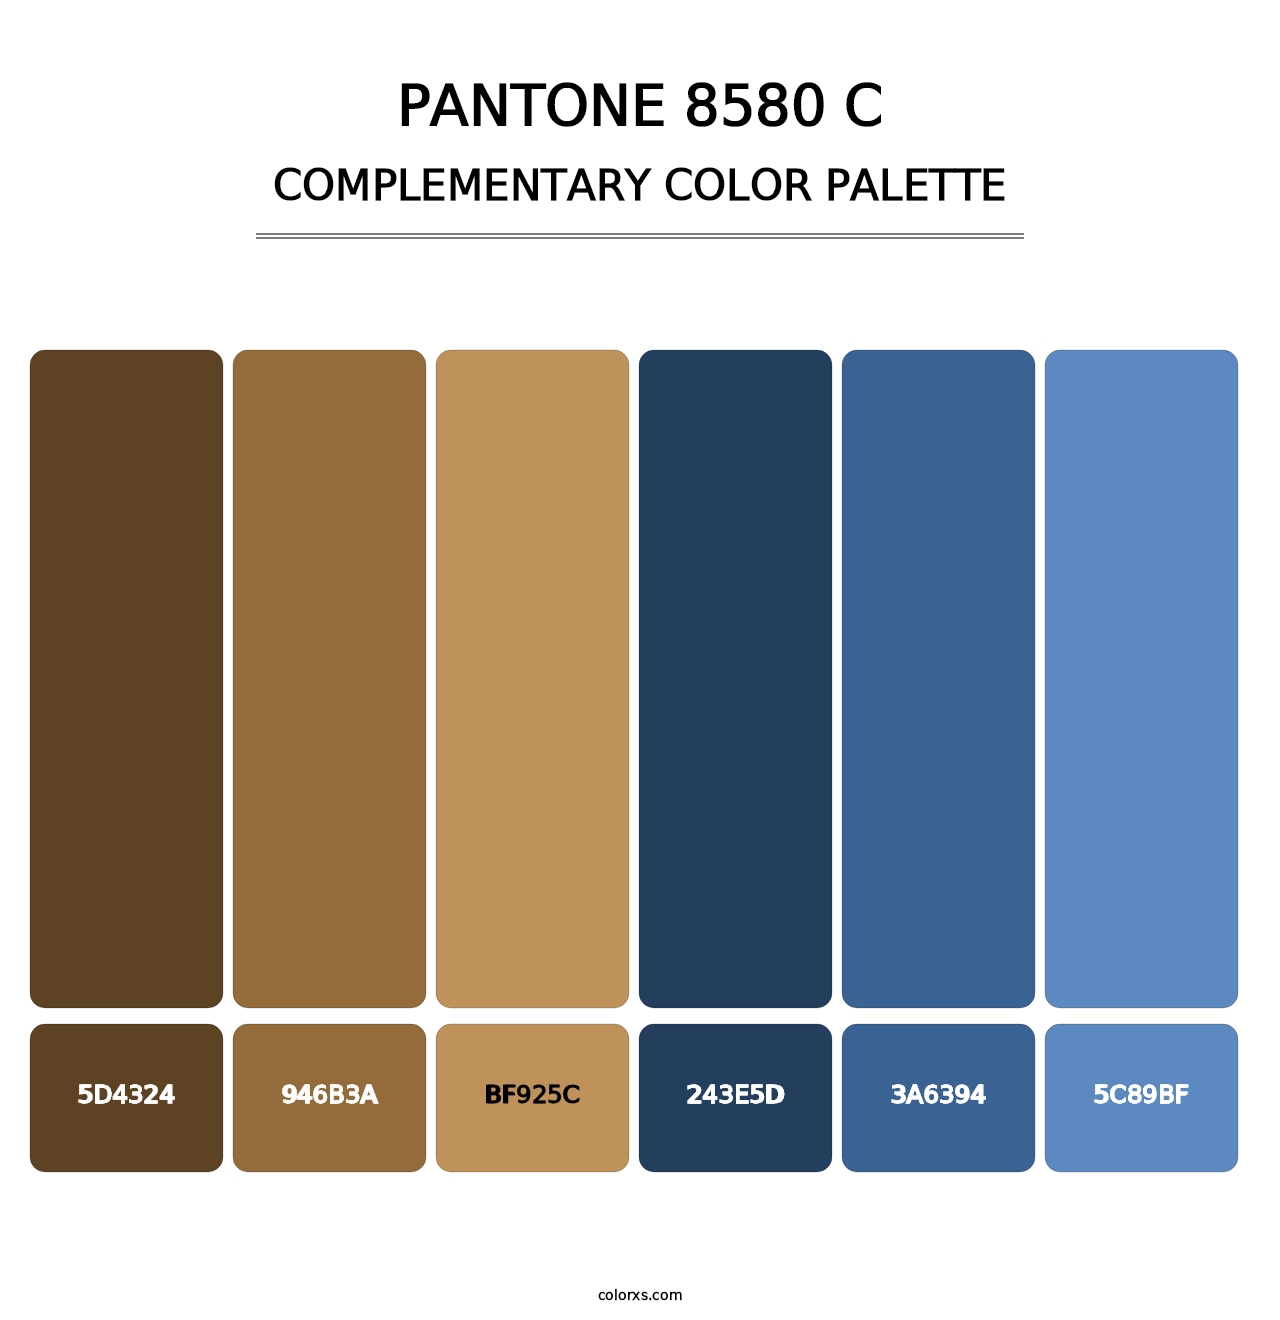 PANTONE 8580 C - Complementary Color Palette